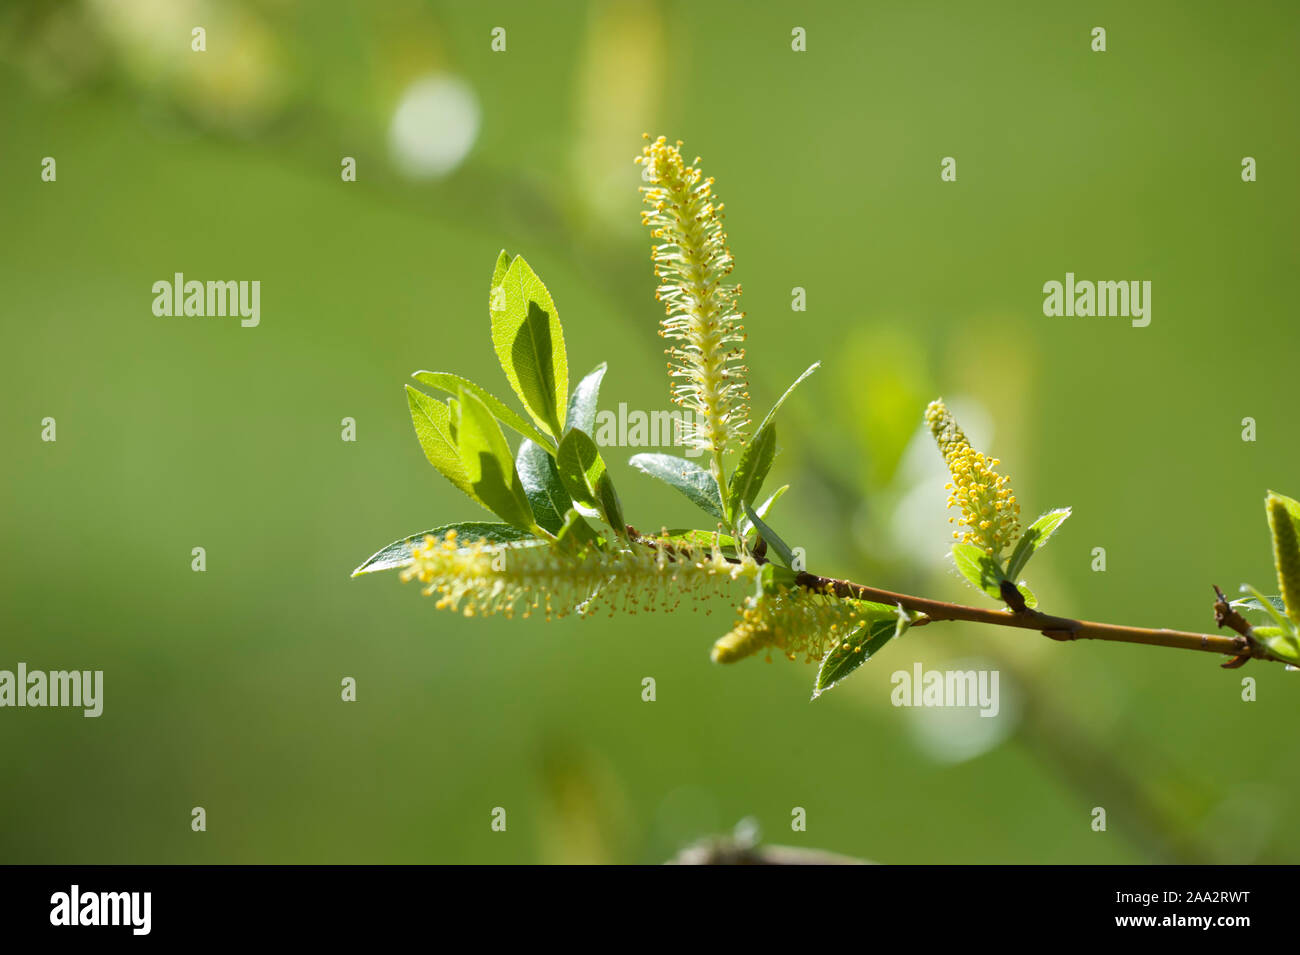 Salix triandra,Mandel-Weide,Almond Willow Stock Photo